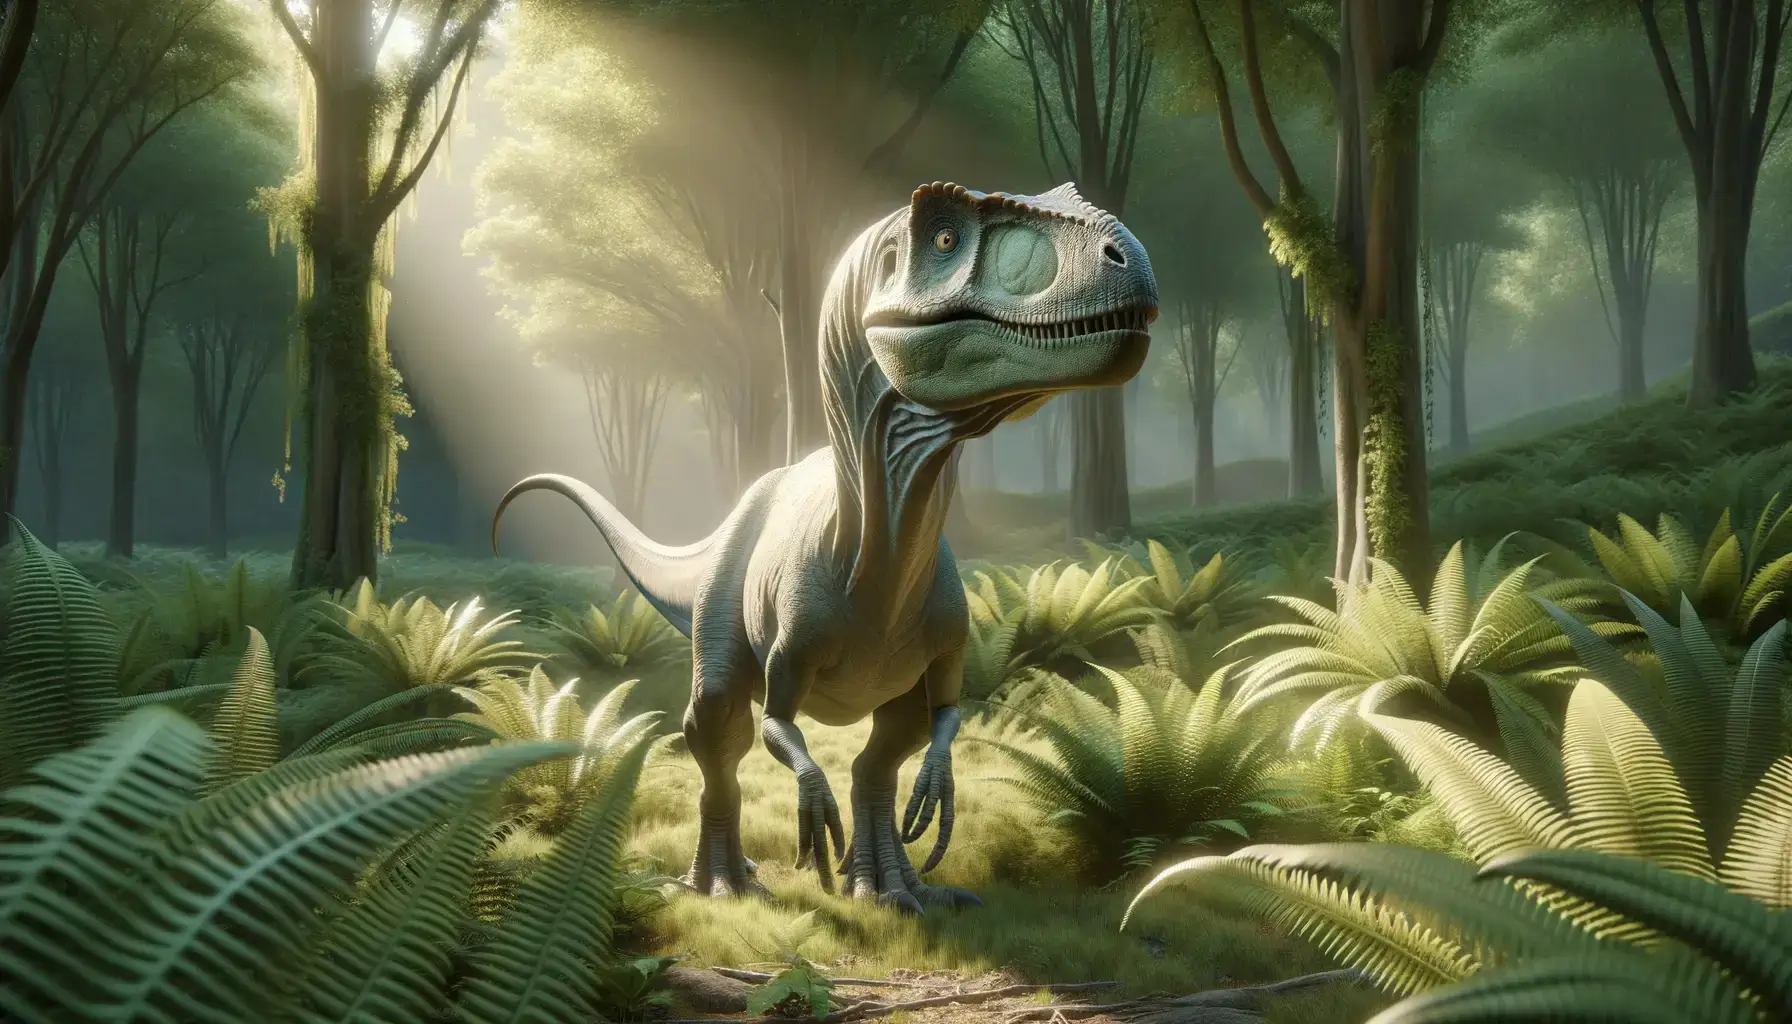 Realistic 3D render of Atlascopcosaurus in Early Cretaceous habitat